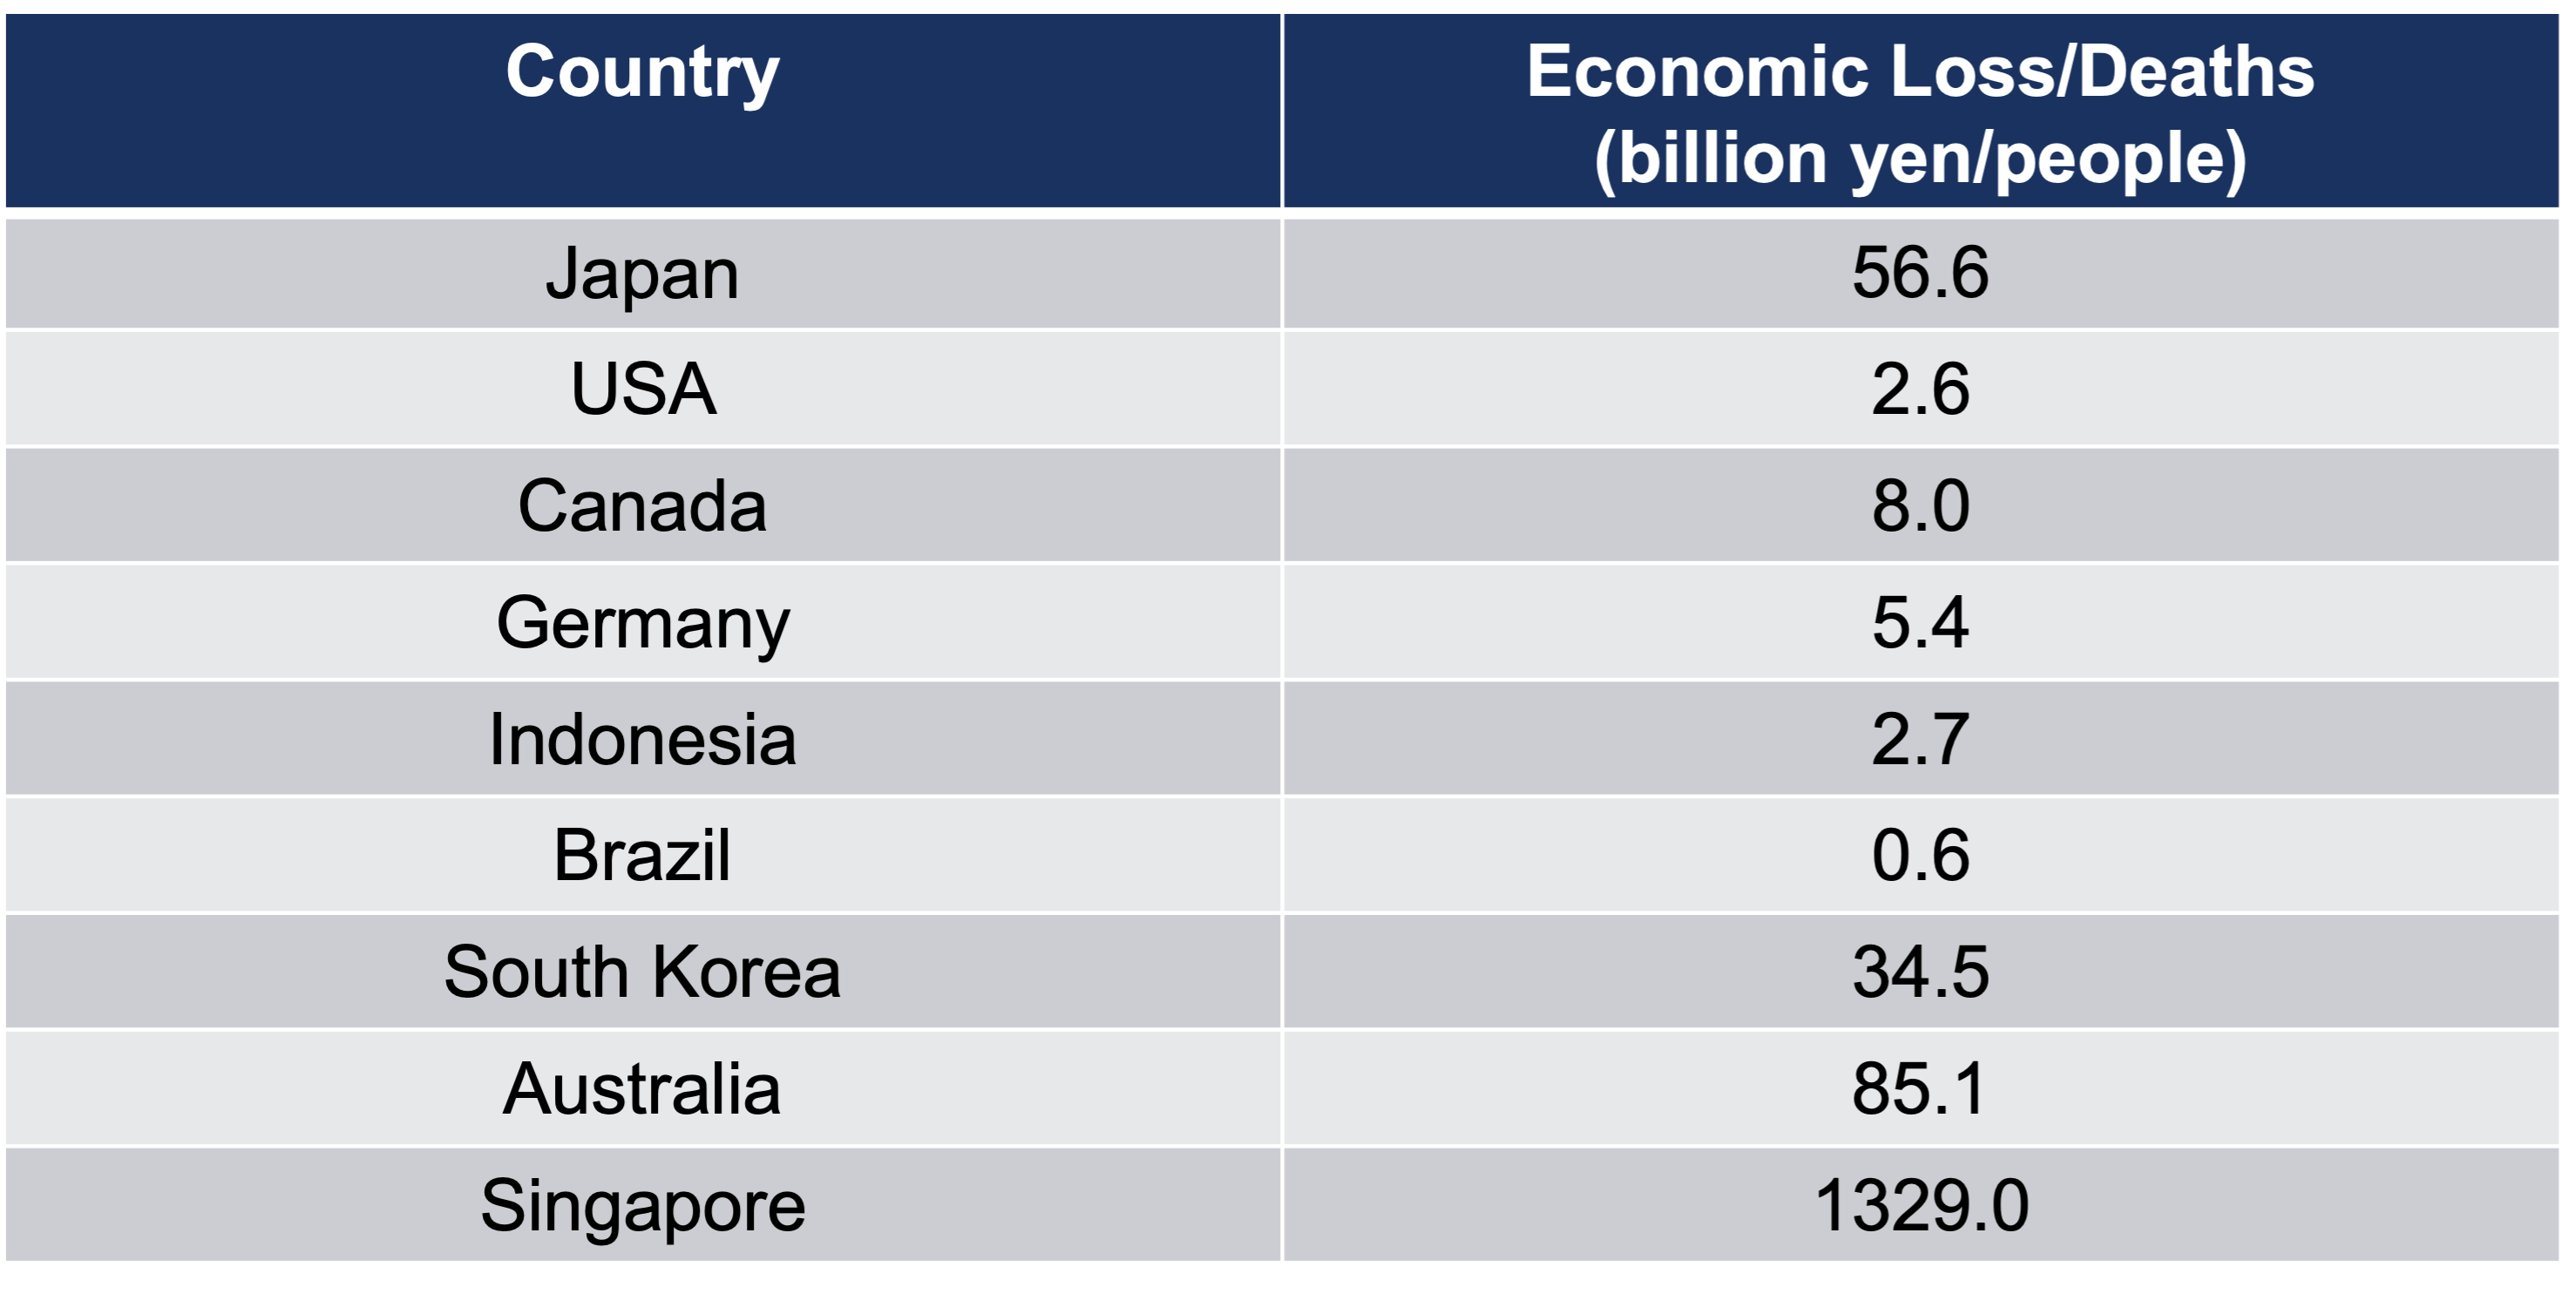 Economic Loss/Deaths (Feb. 2021)